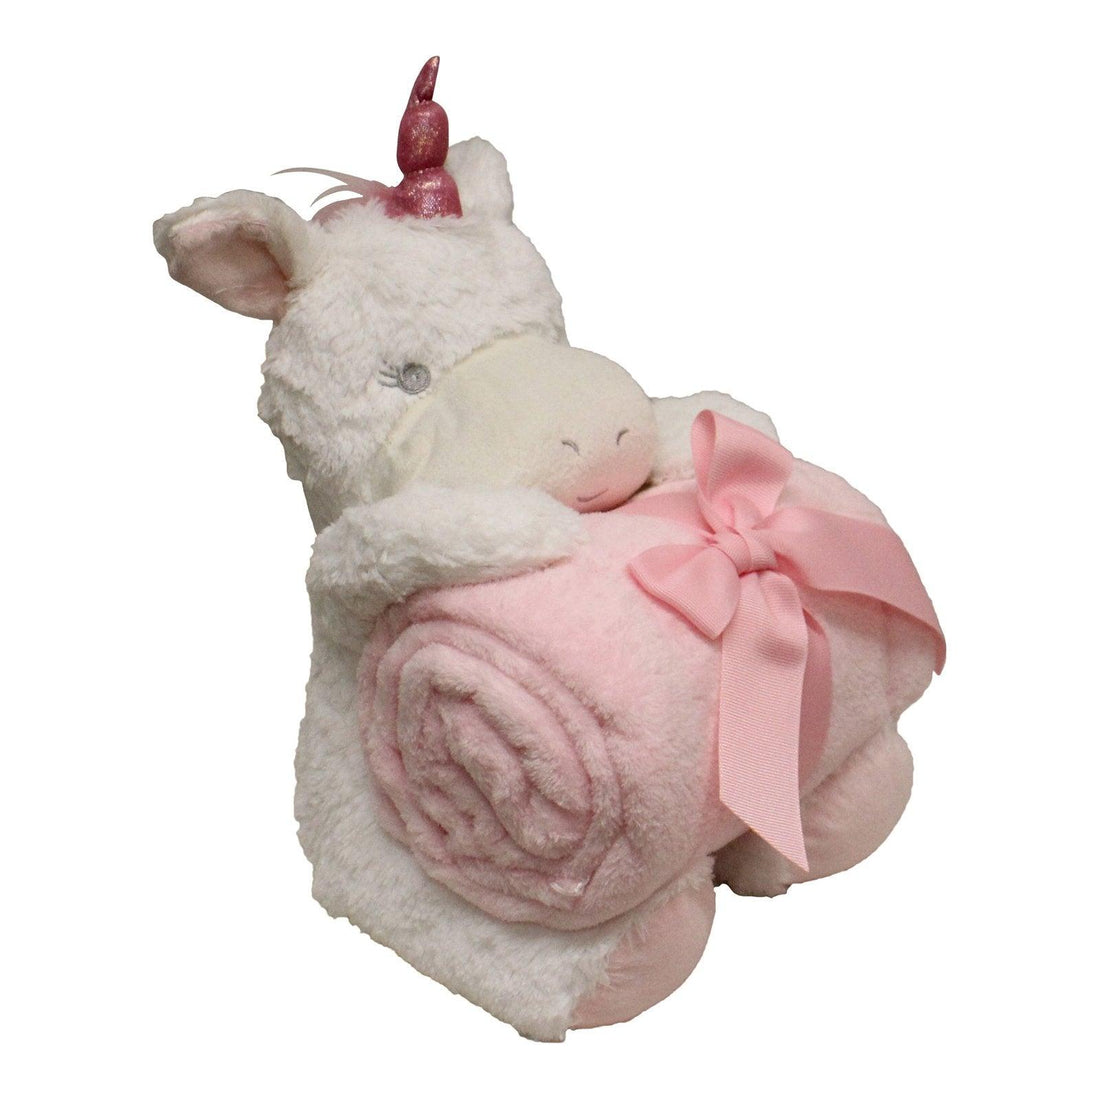 New Baby White Unicorn Teddy & Pink Throw - £23.99 - New Baby 